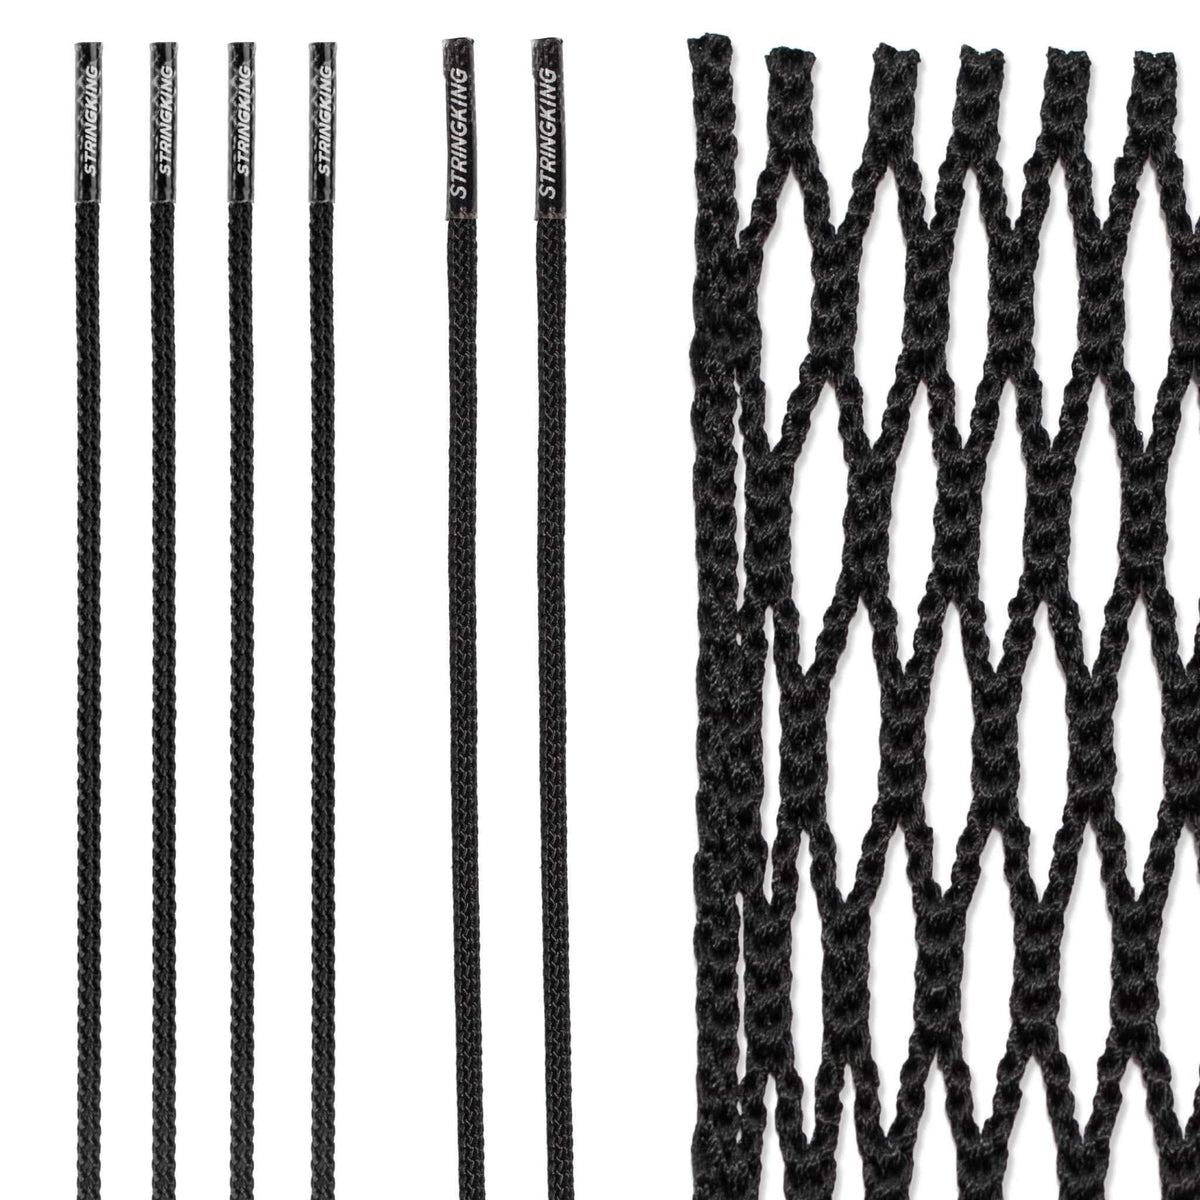 StringKing Stringing Supplies Black StringKing Womens Type 4 Lacrosse Mesh Kit from Lacrosse Fanatic